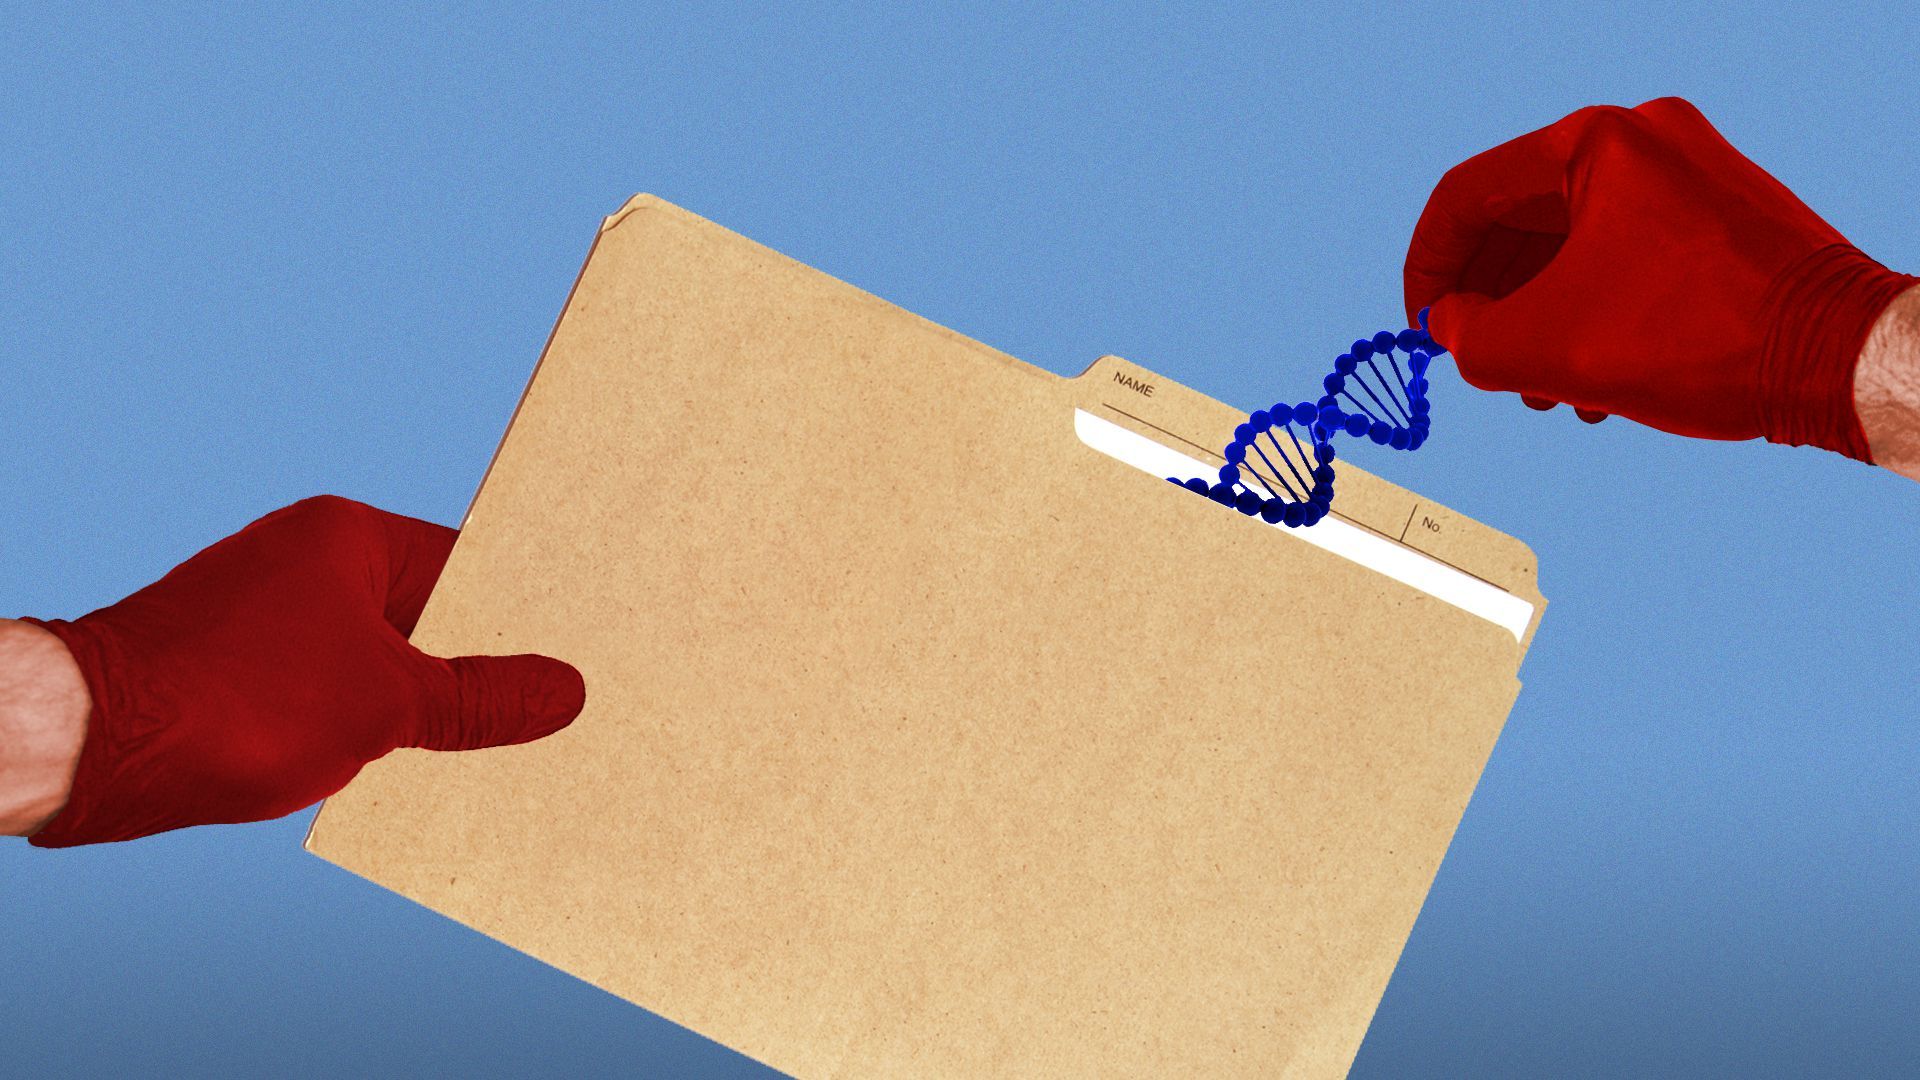 Illustration of hands with medical gloves placing a DNA strand in a folder